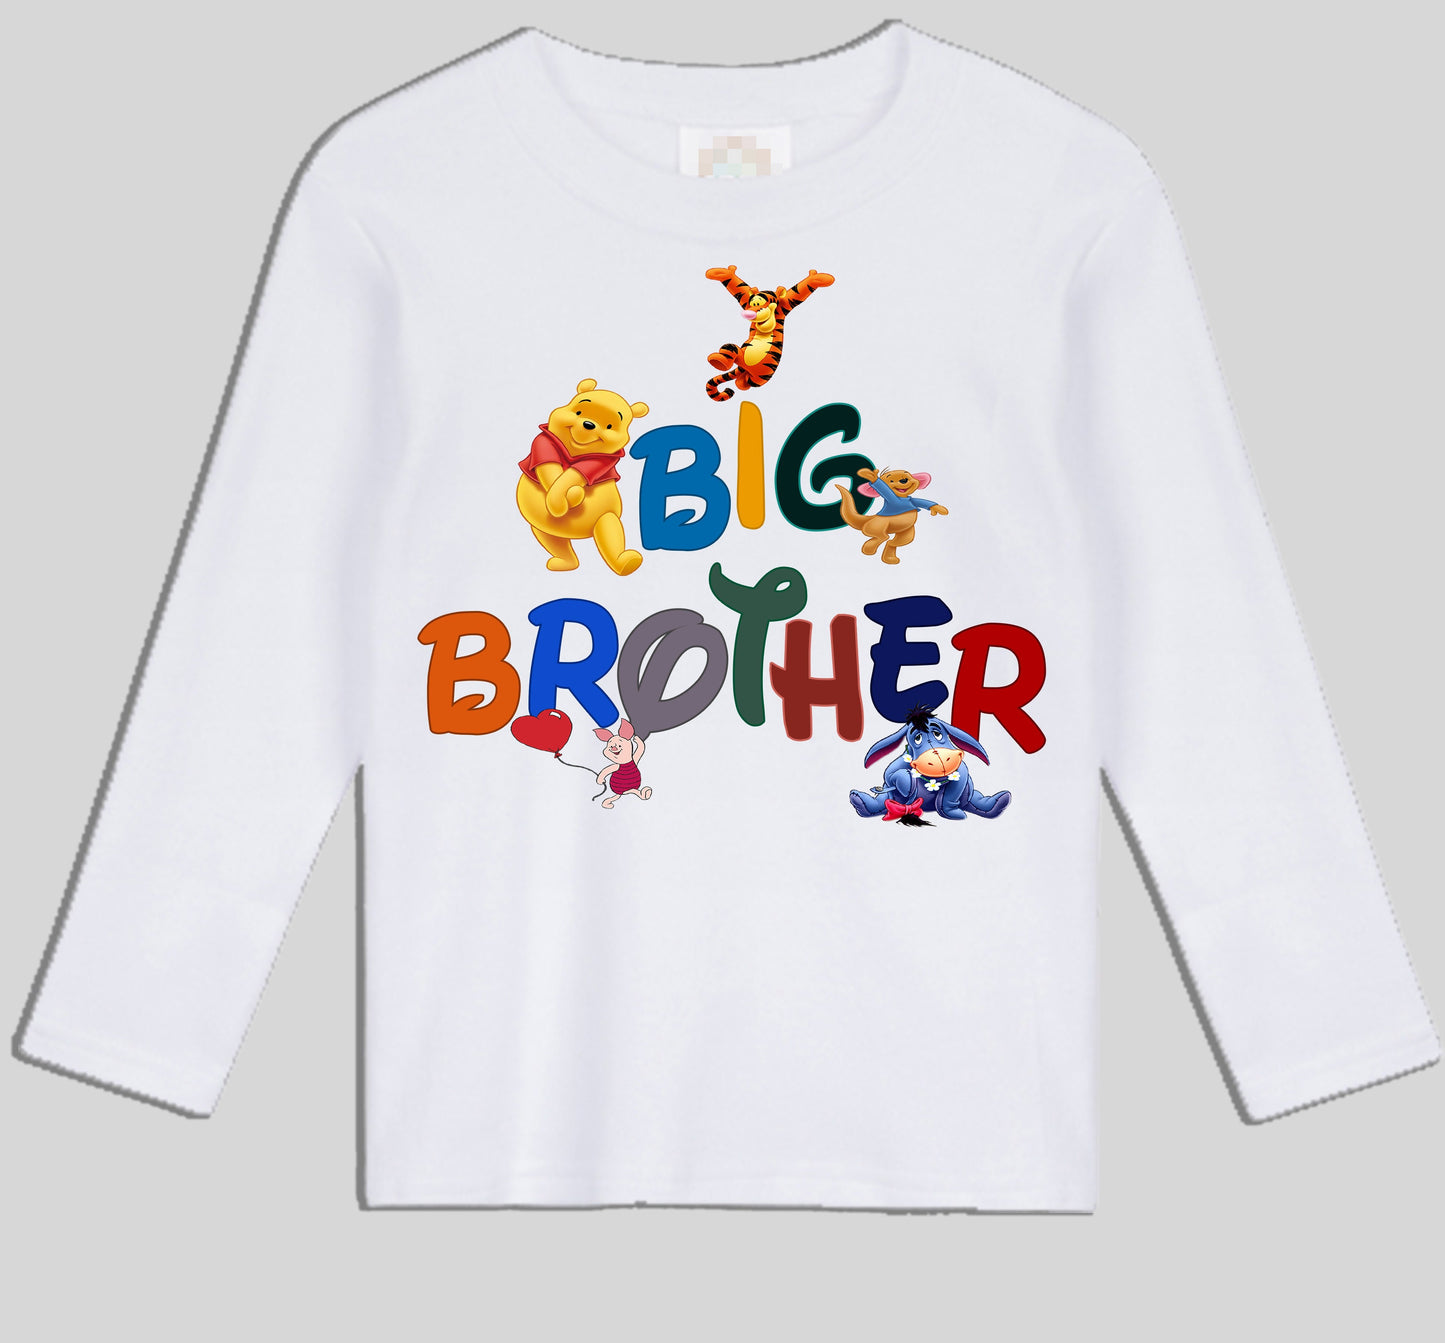 Big brother shirt Winnie  and Friends shirt. Winnie and friends Big brother shirt